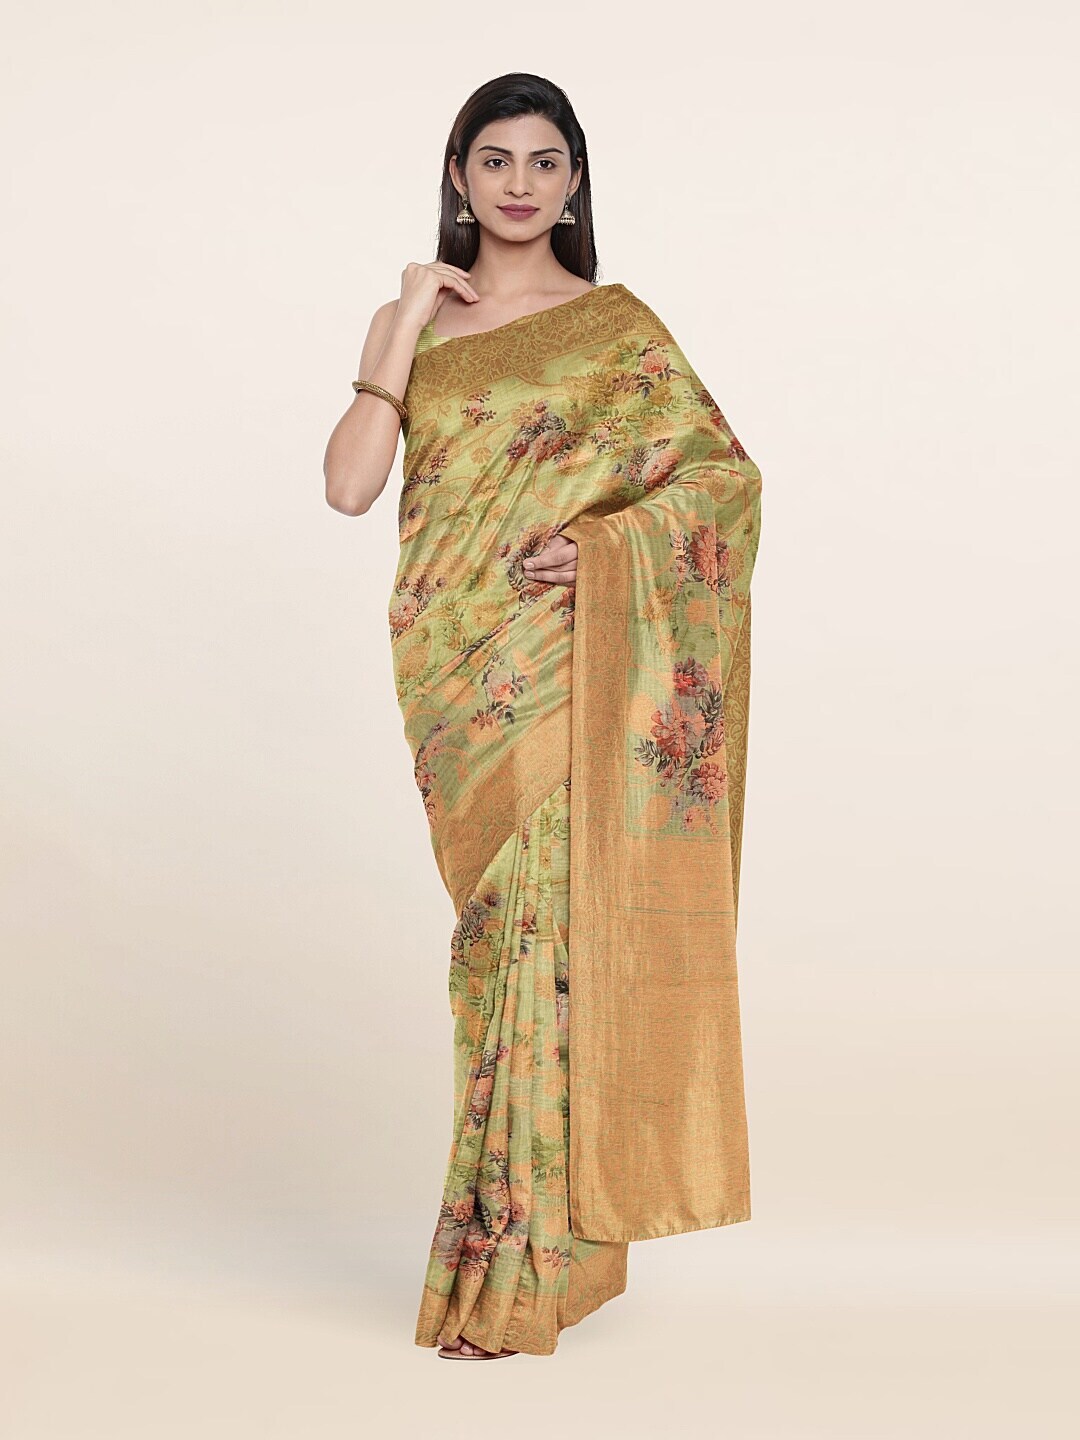 Pothys Green & Gold-Toned Floral Zari Art Silk Saree Price in India